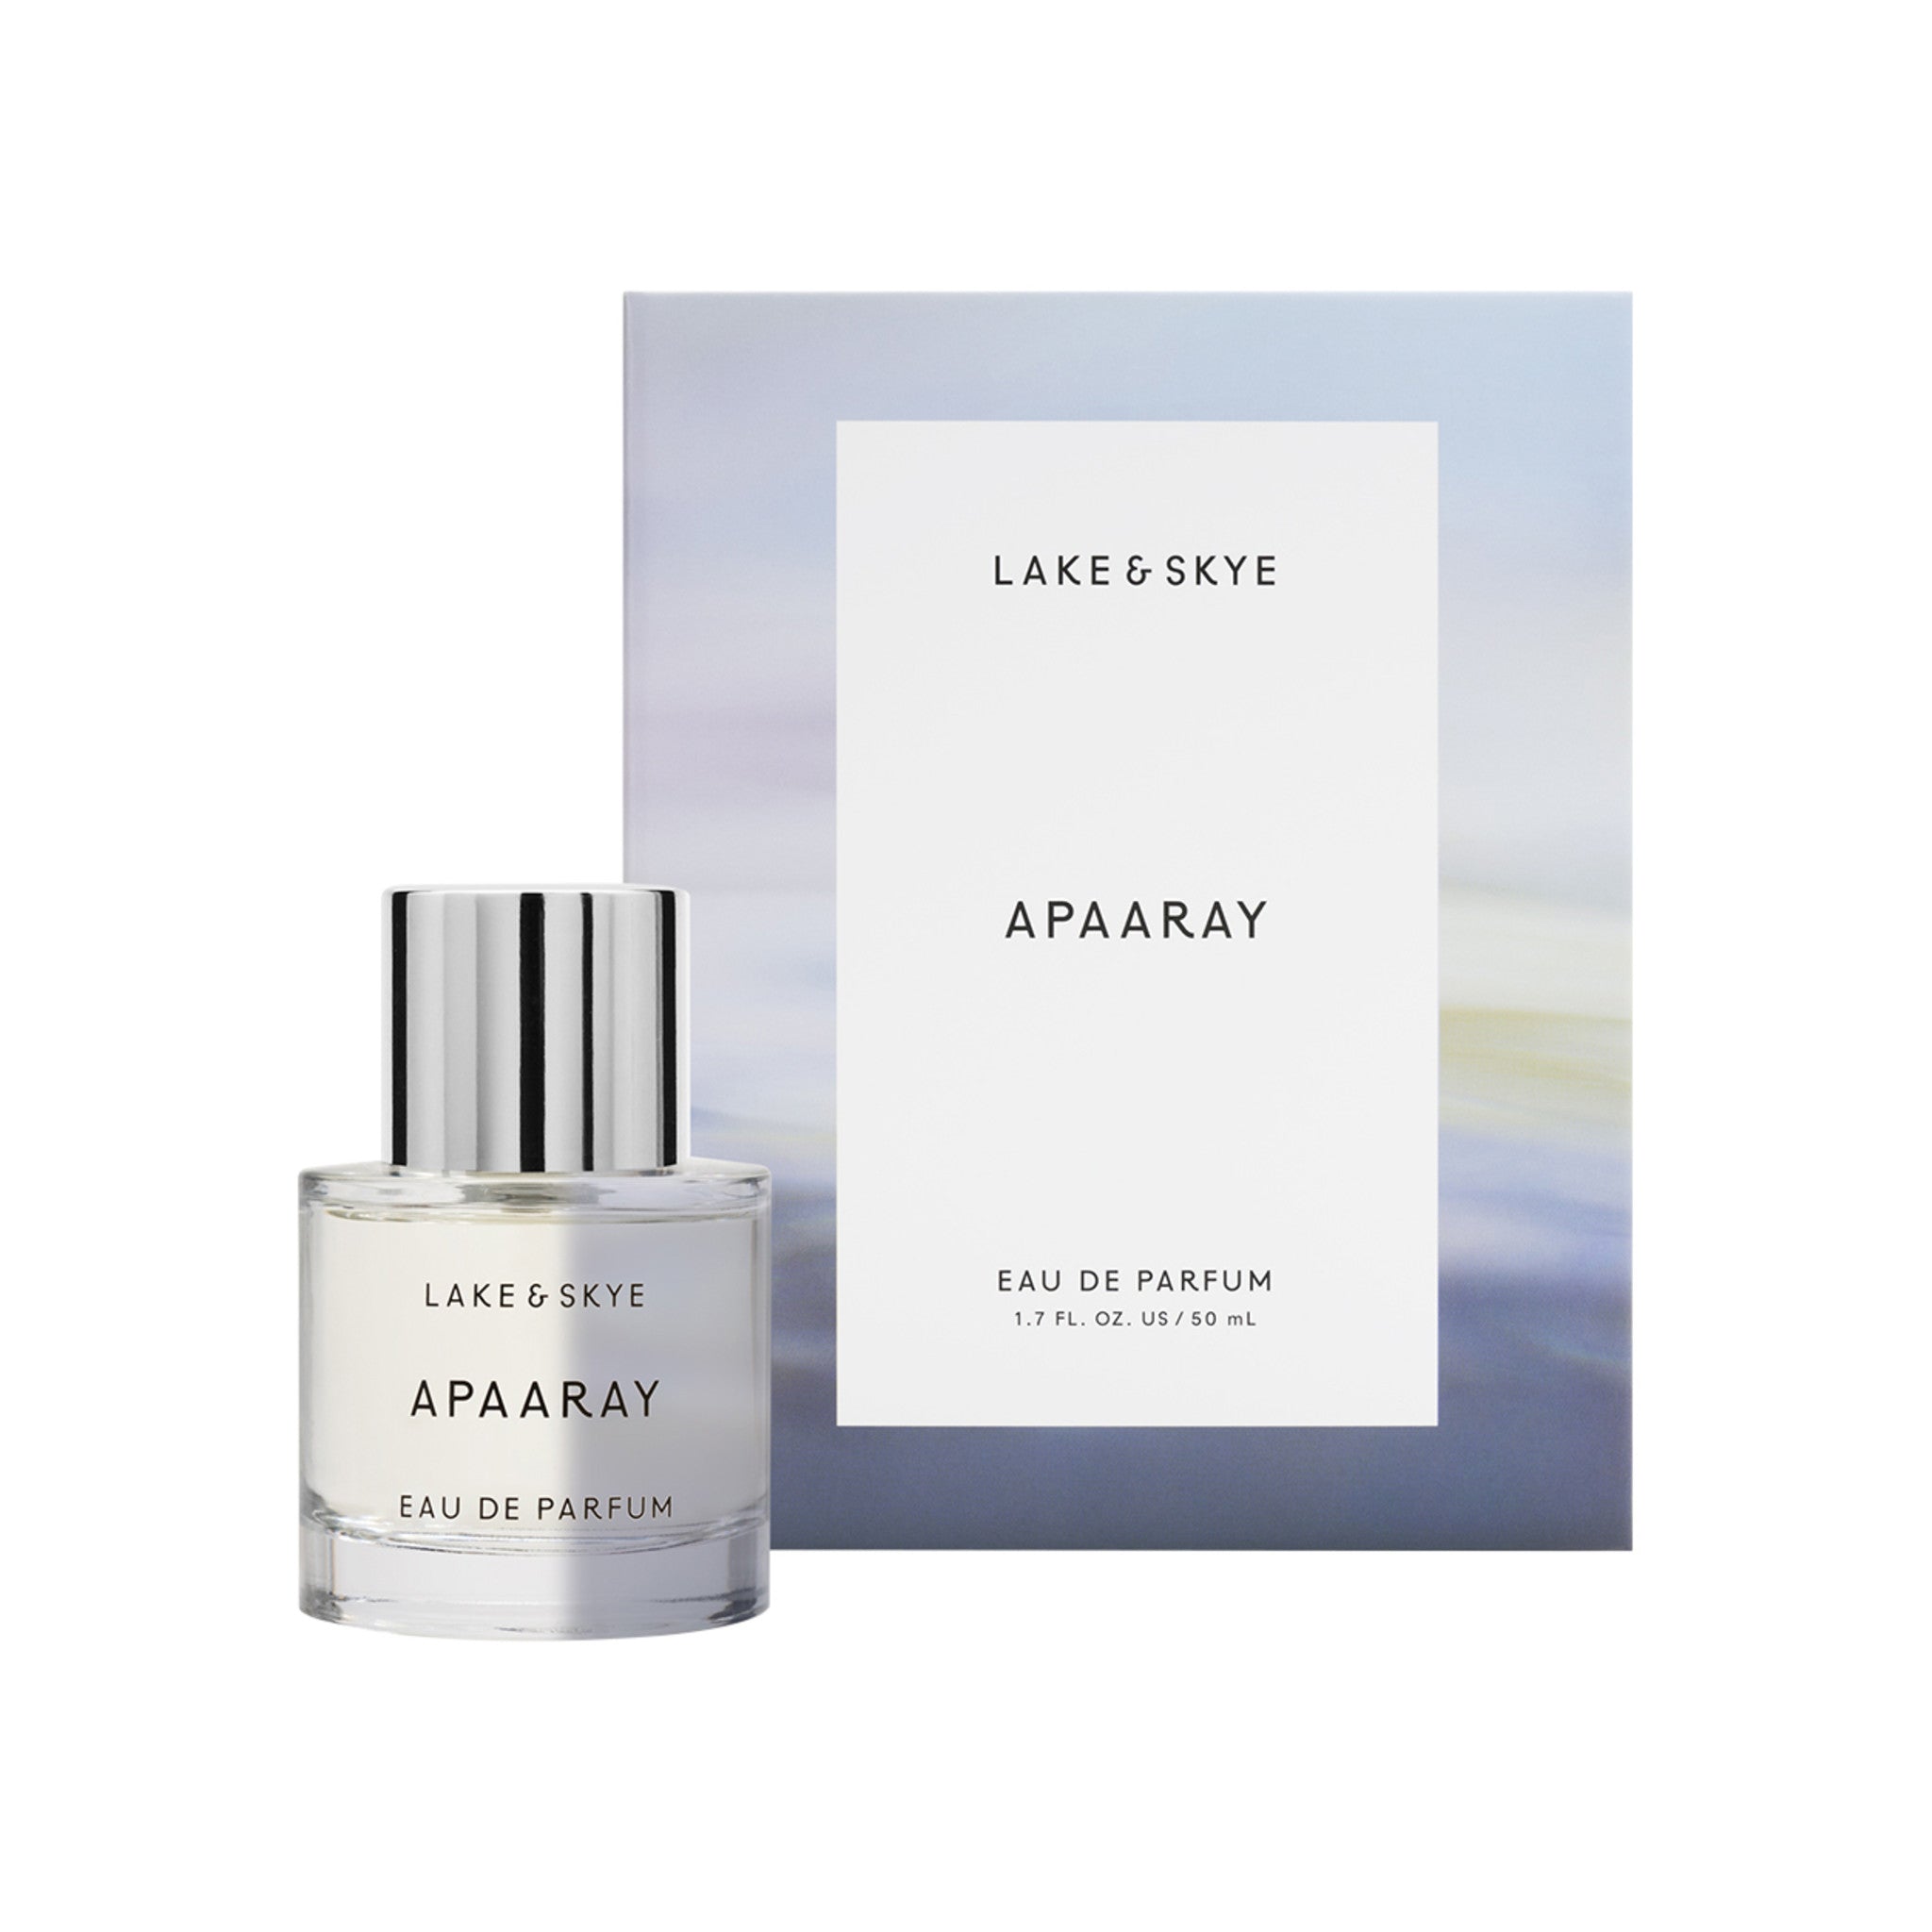 Lake & Skye Apaaray Eau de Parfum Size variant: 1.7 fl oz | 50 ml main image.